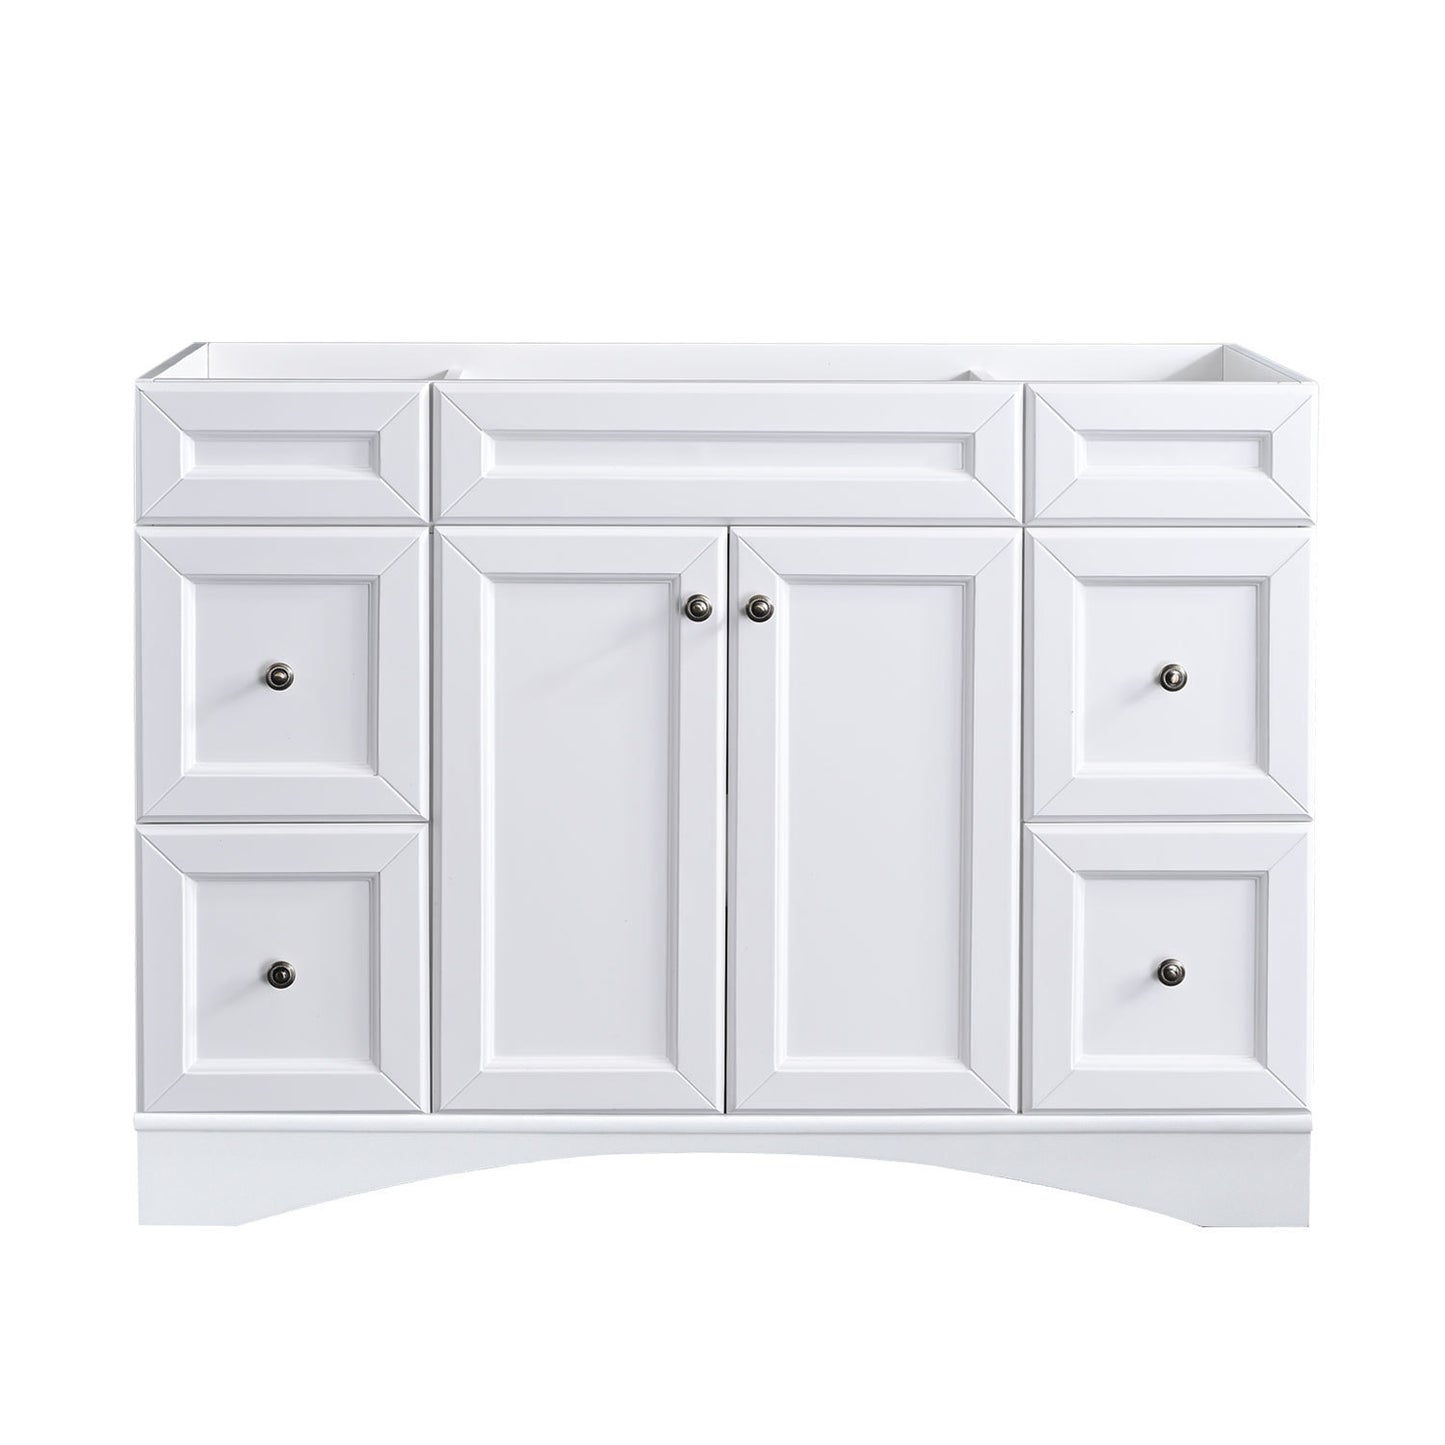 48 Inch Bathroom Vanity Cabinet in White, Vanity Base only